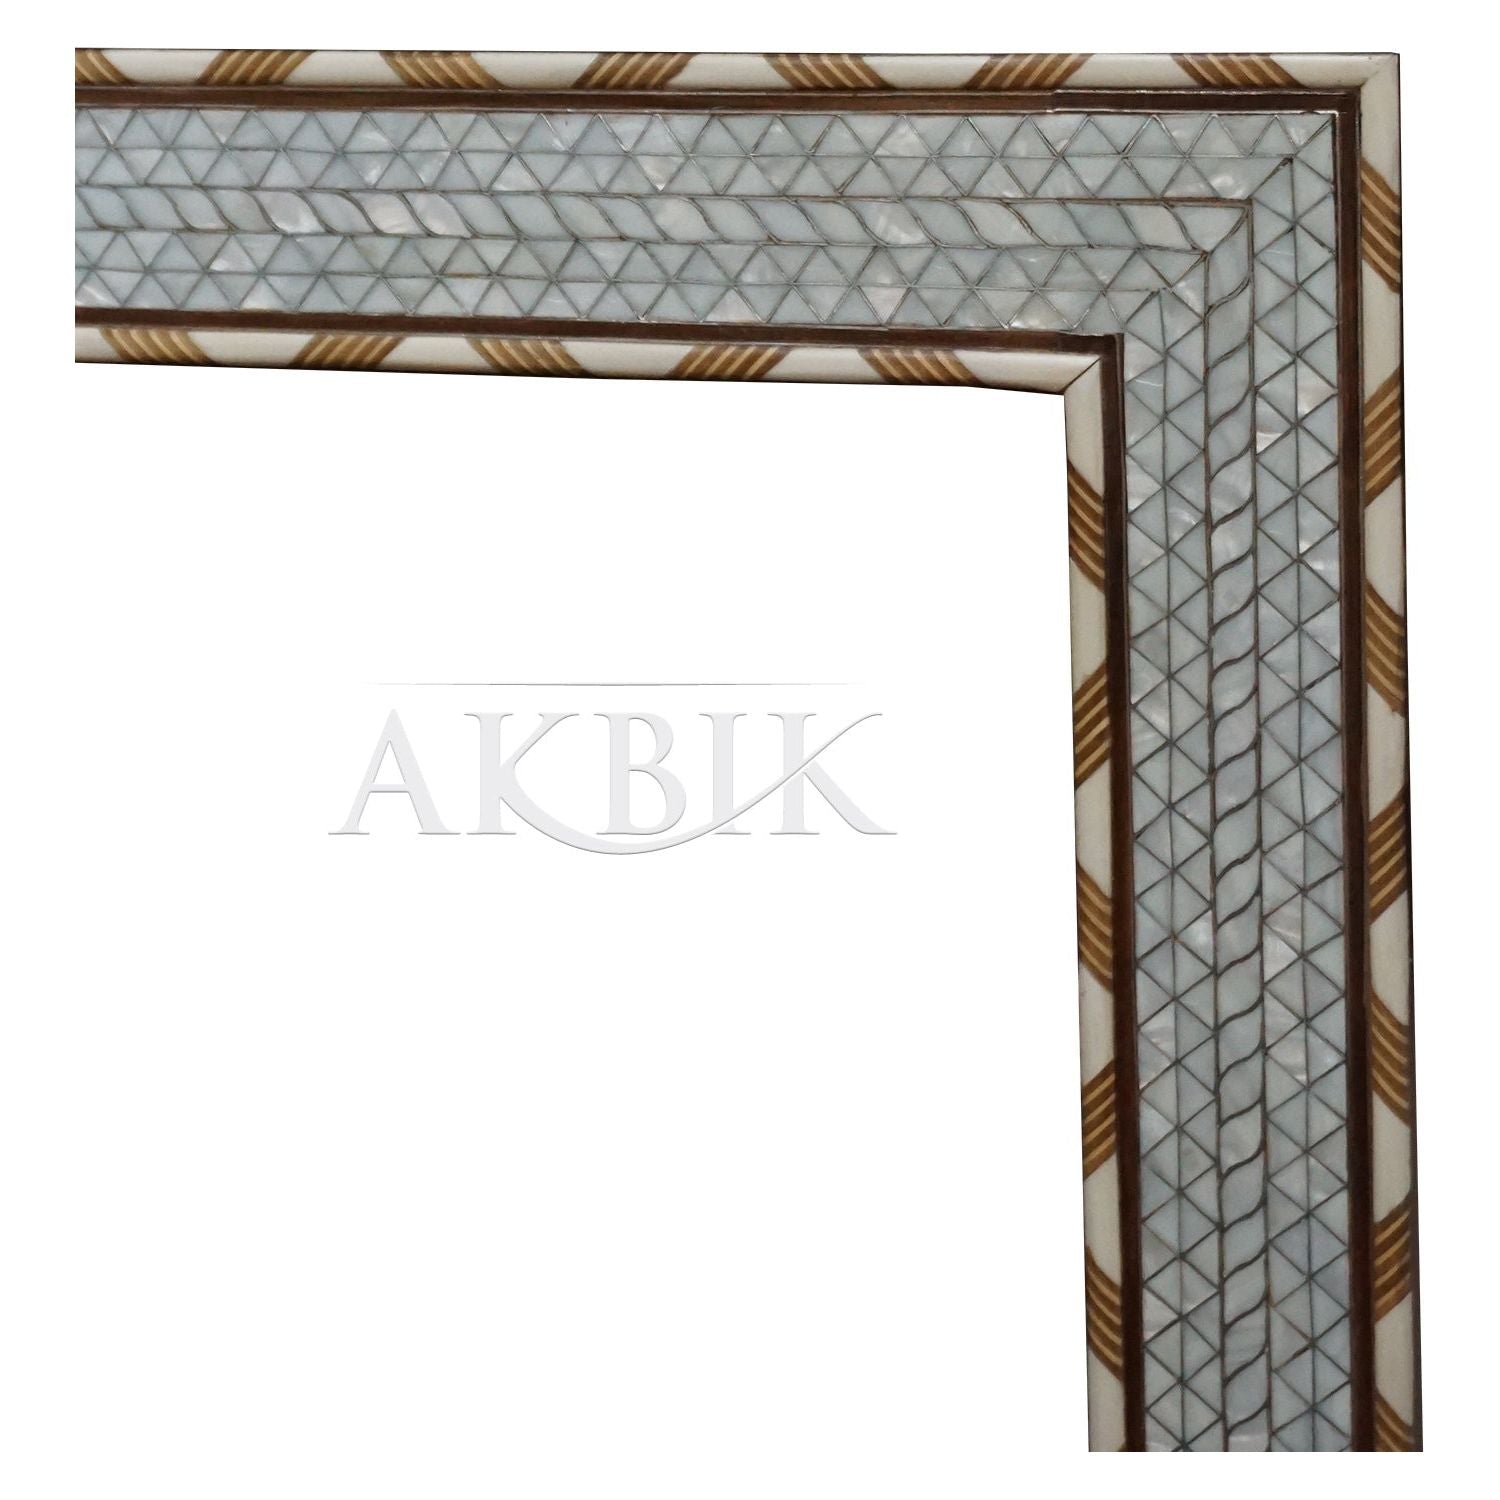 Waves Of Pearls Mirror - AKBIK Furniture & Design